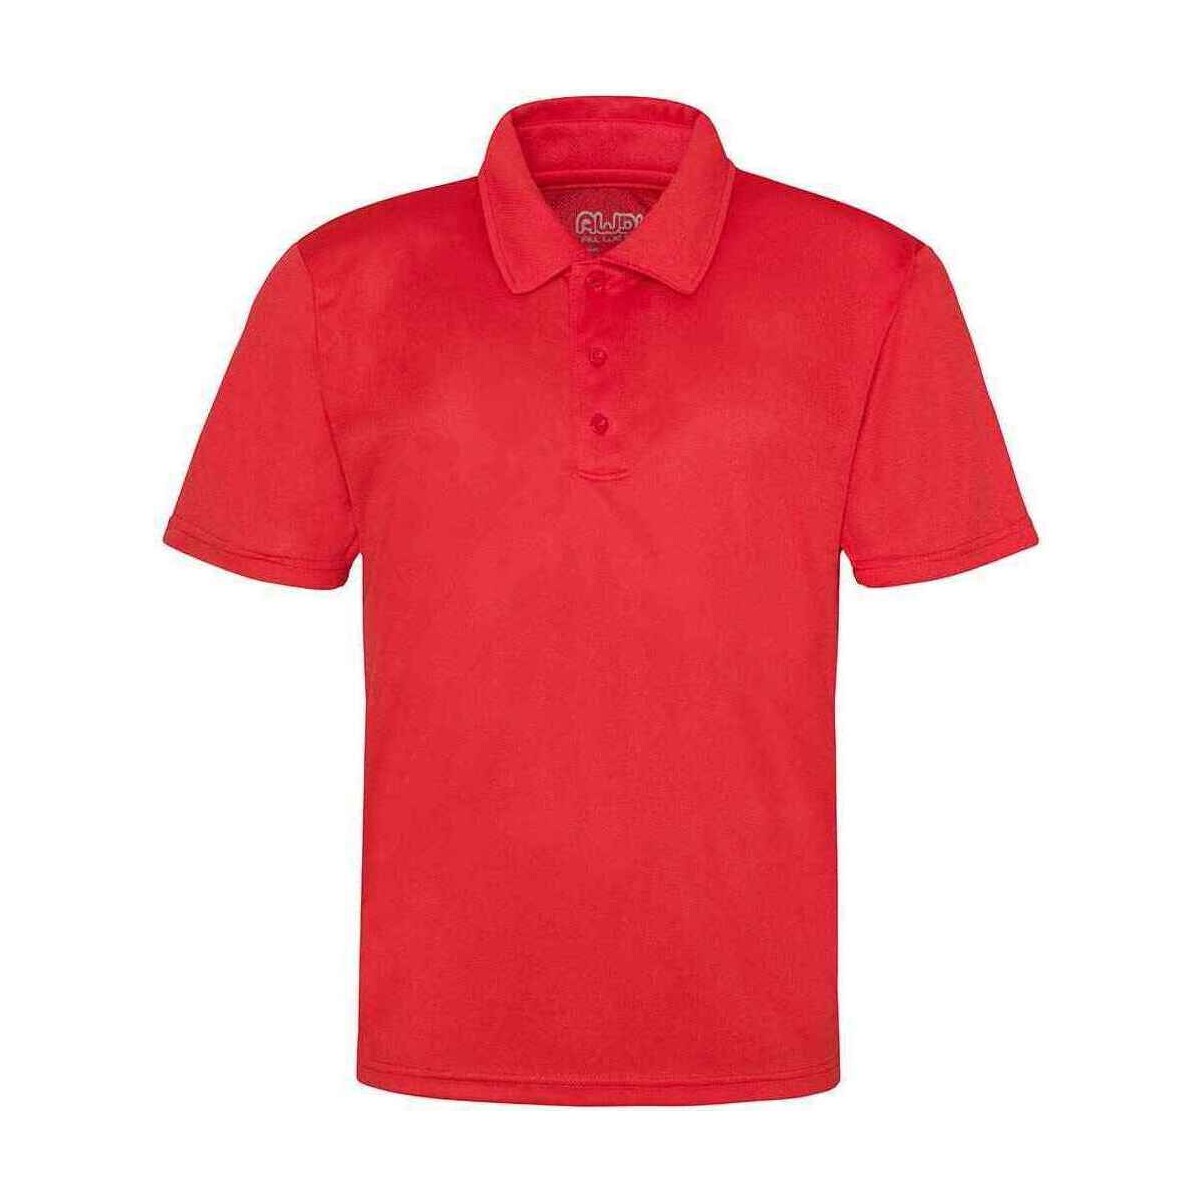 textil Hombre Tops y Camisetas Awdis Cool JC040 Rojo